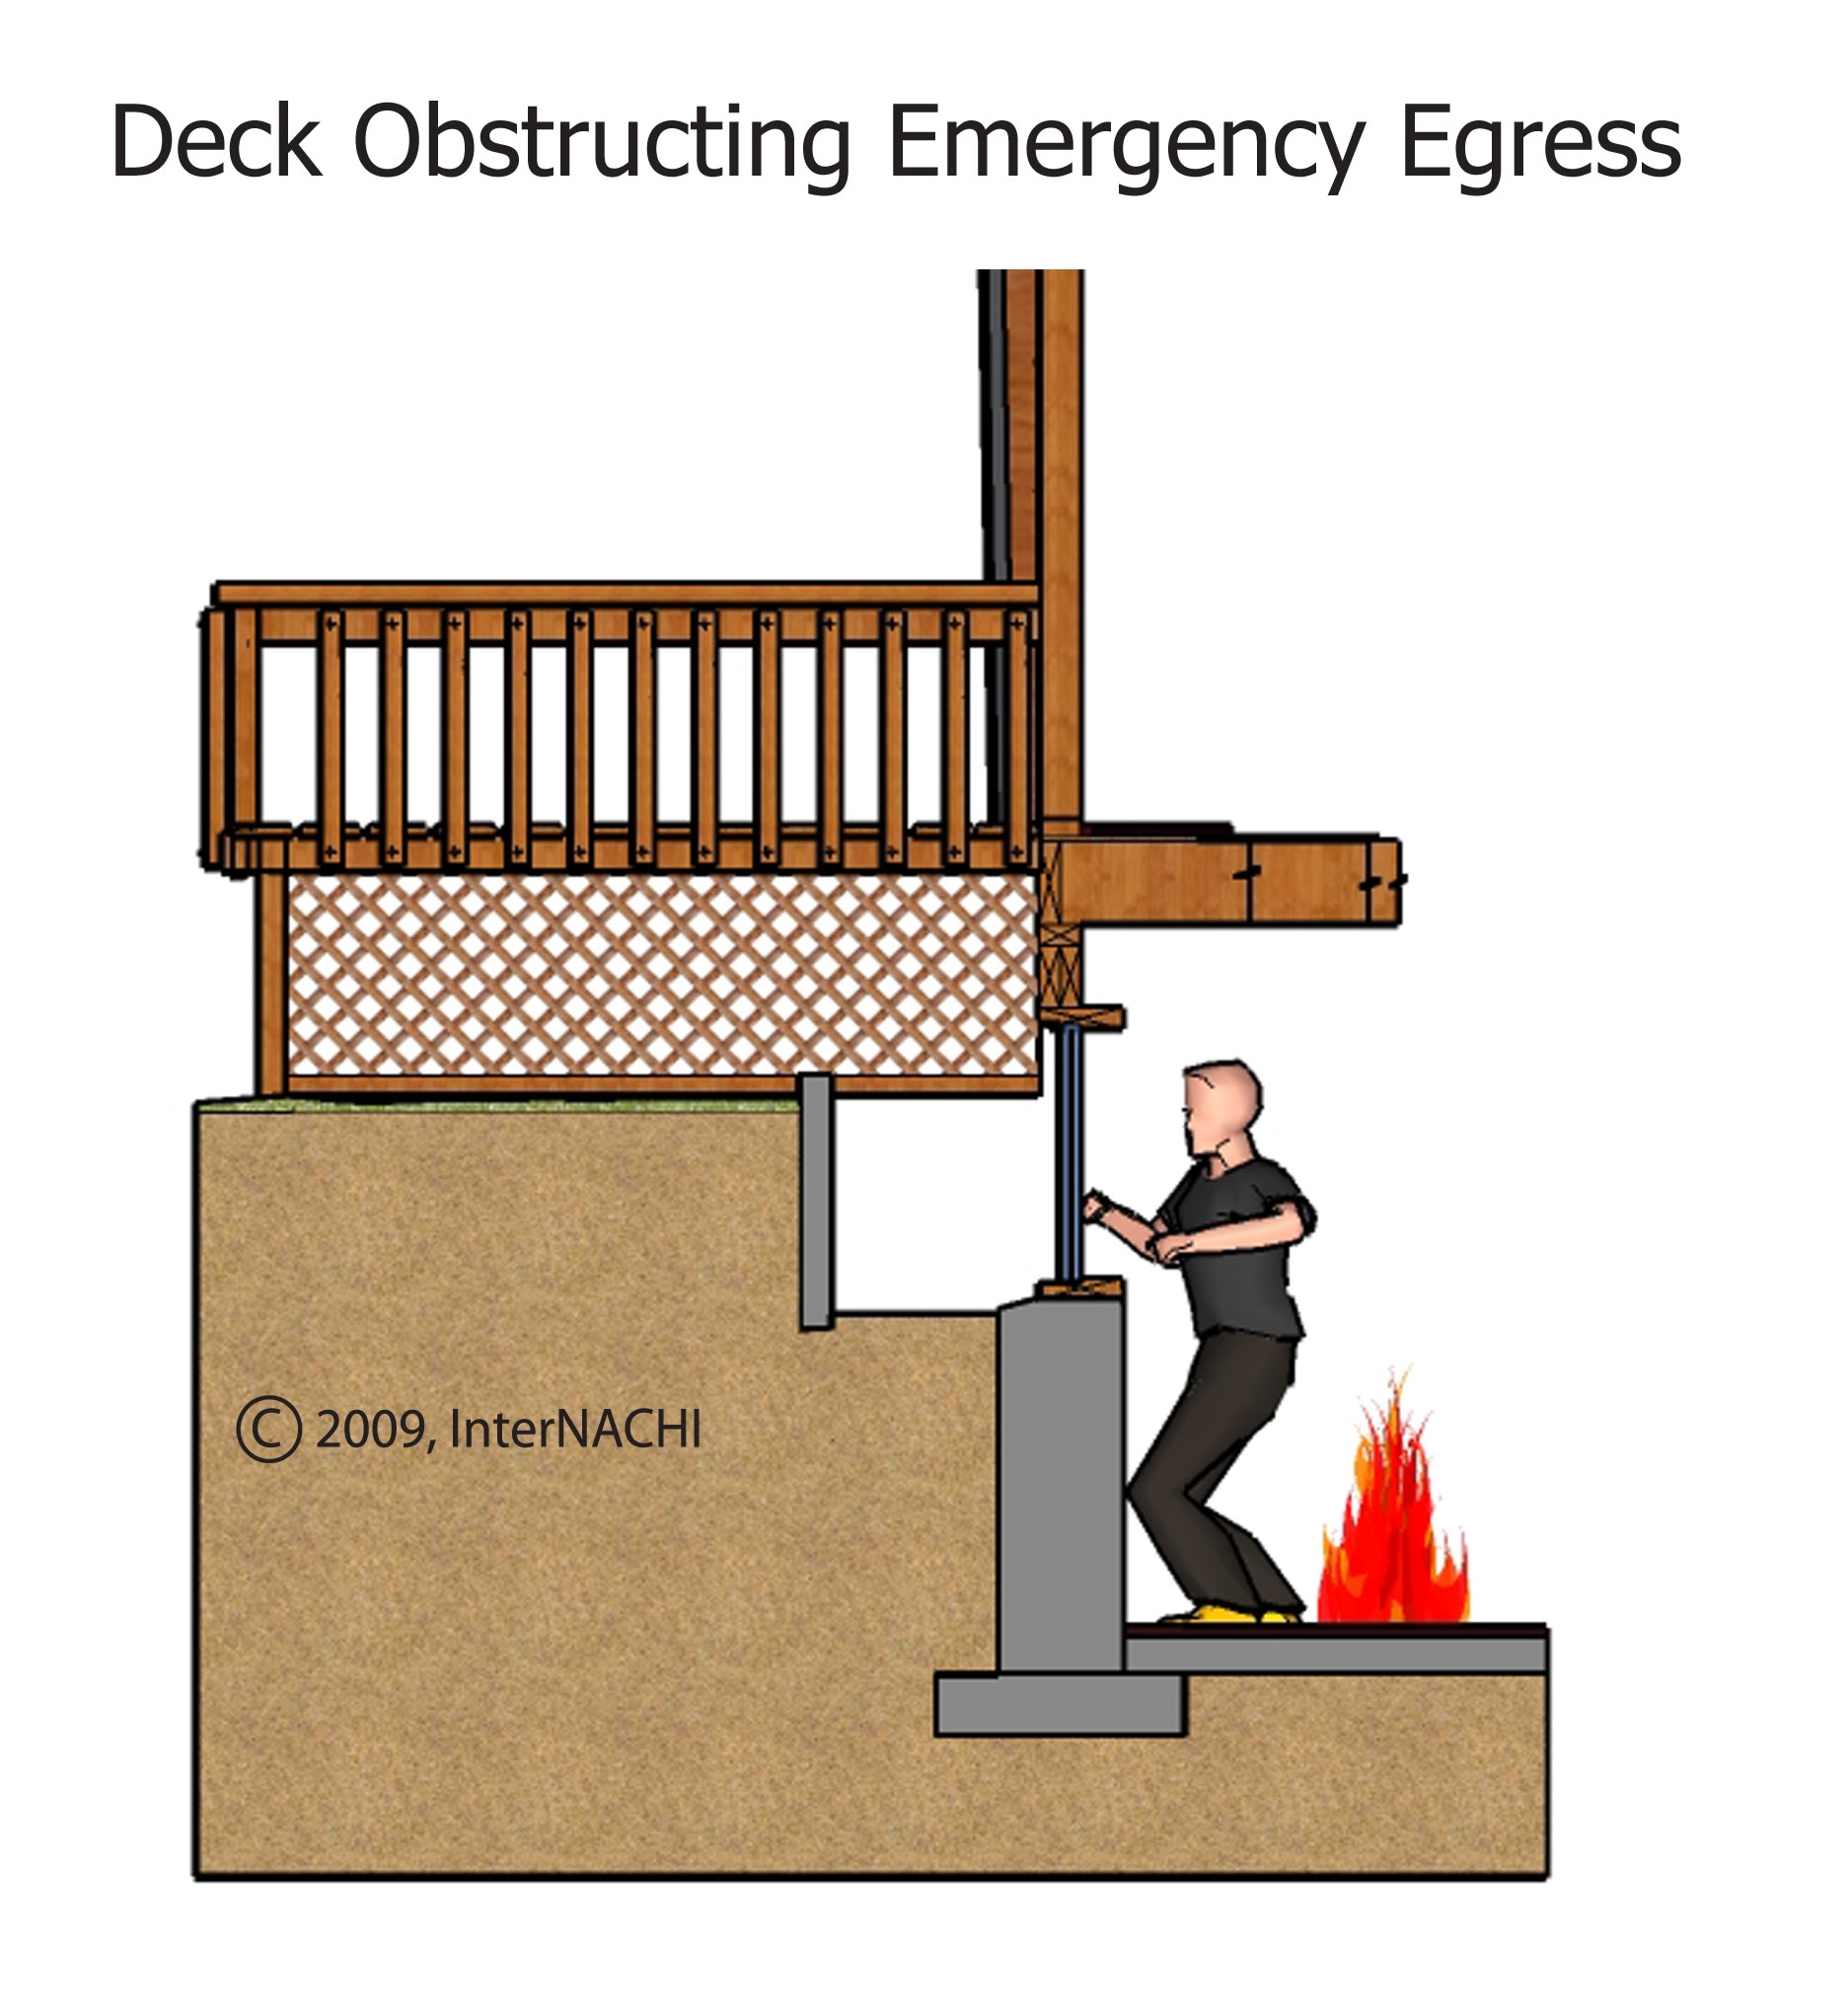 Deck obstructing emergency egress.